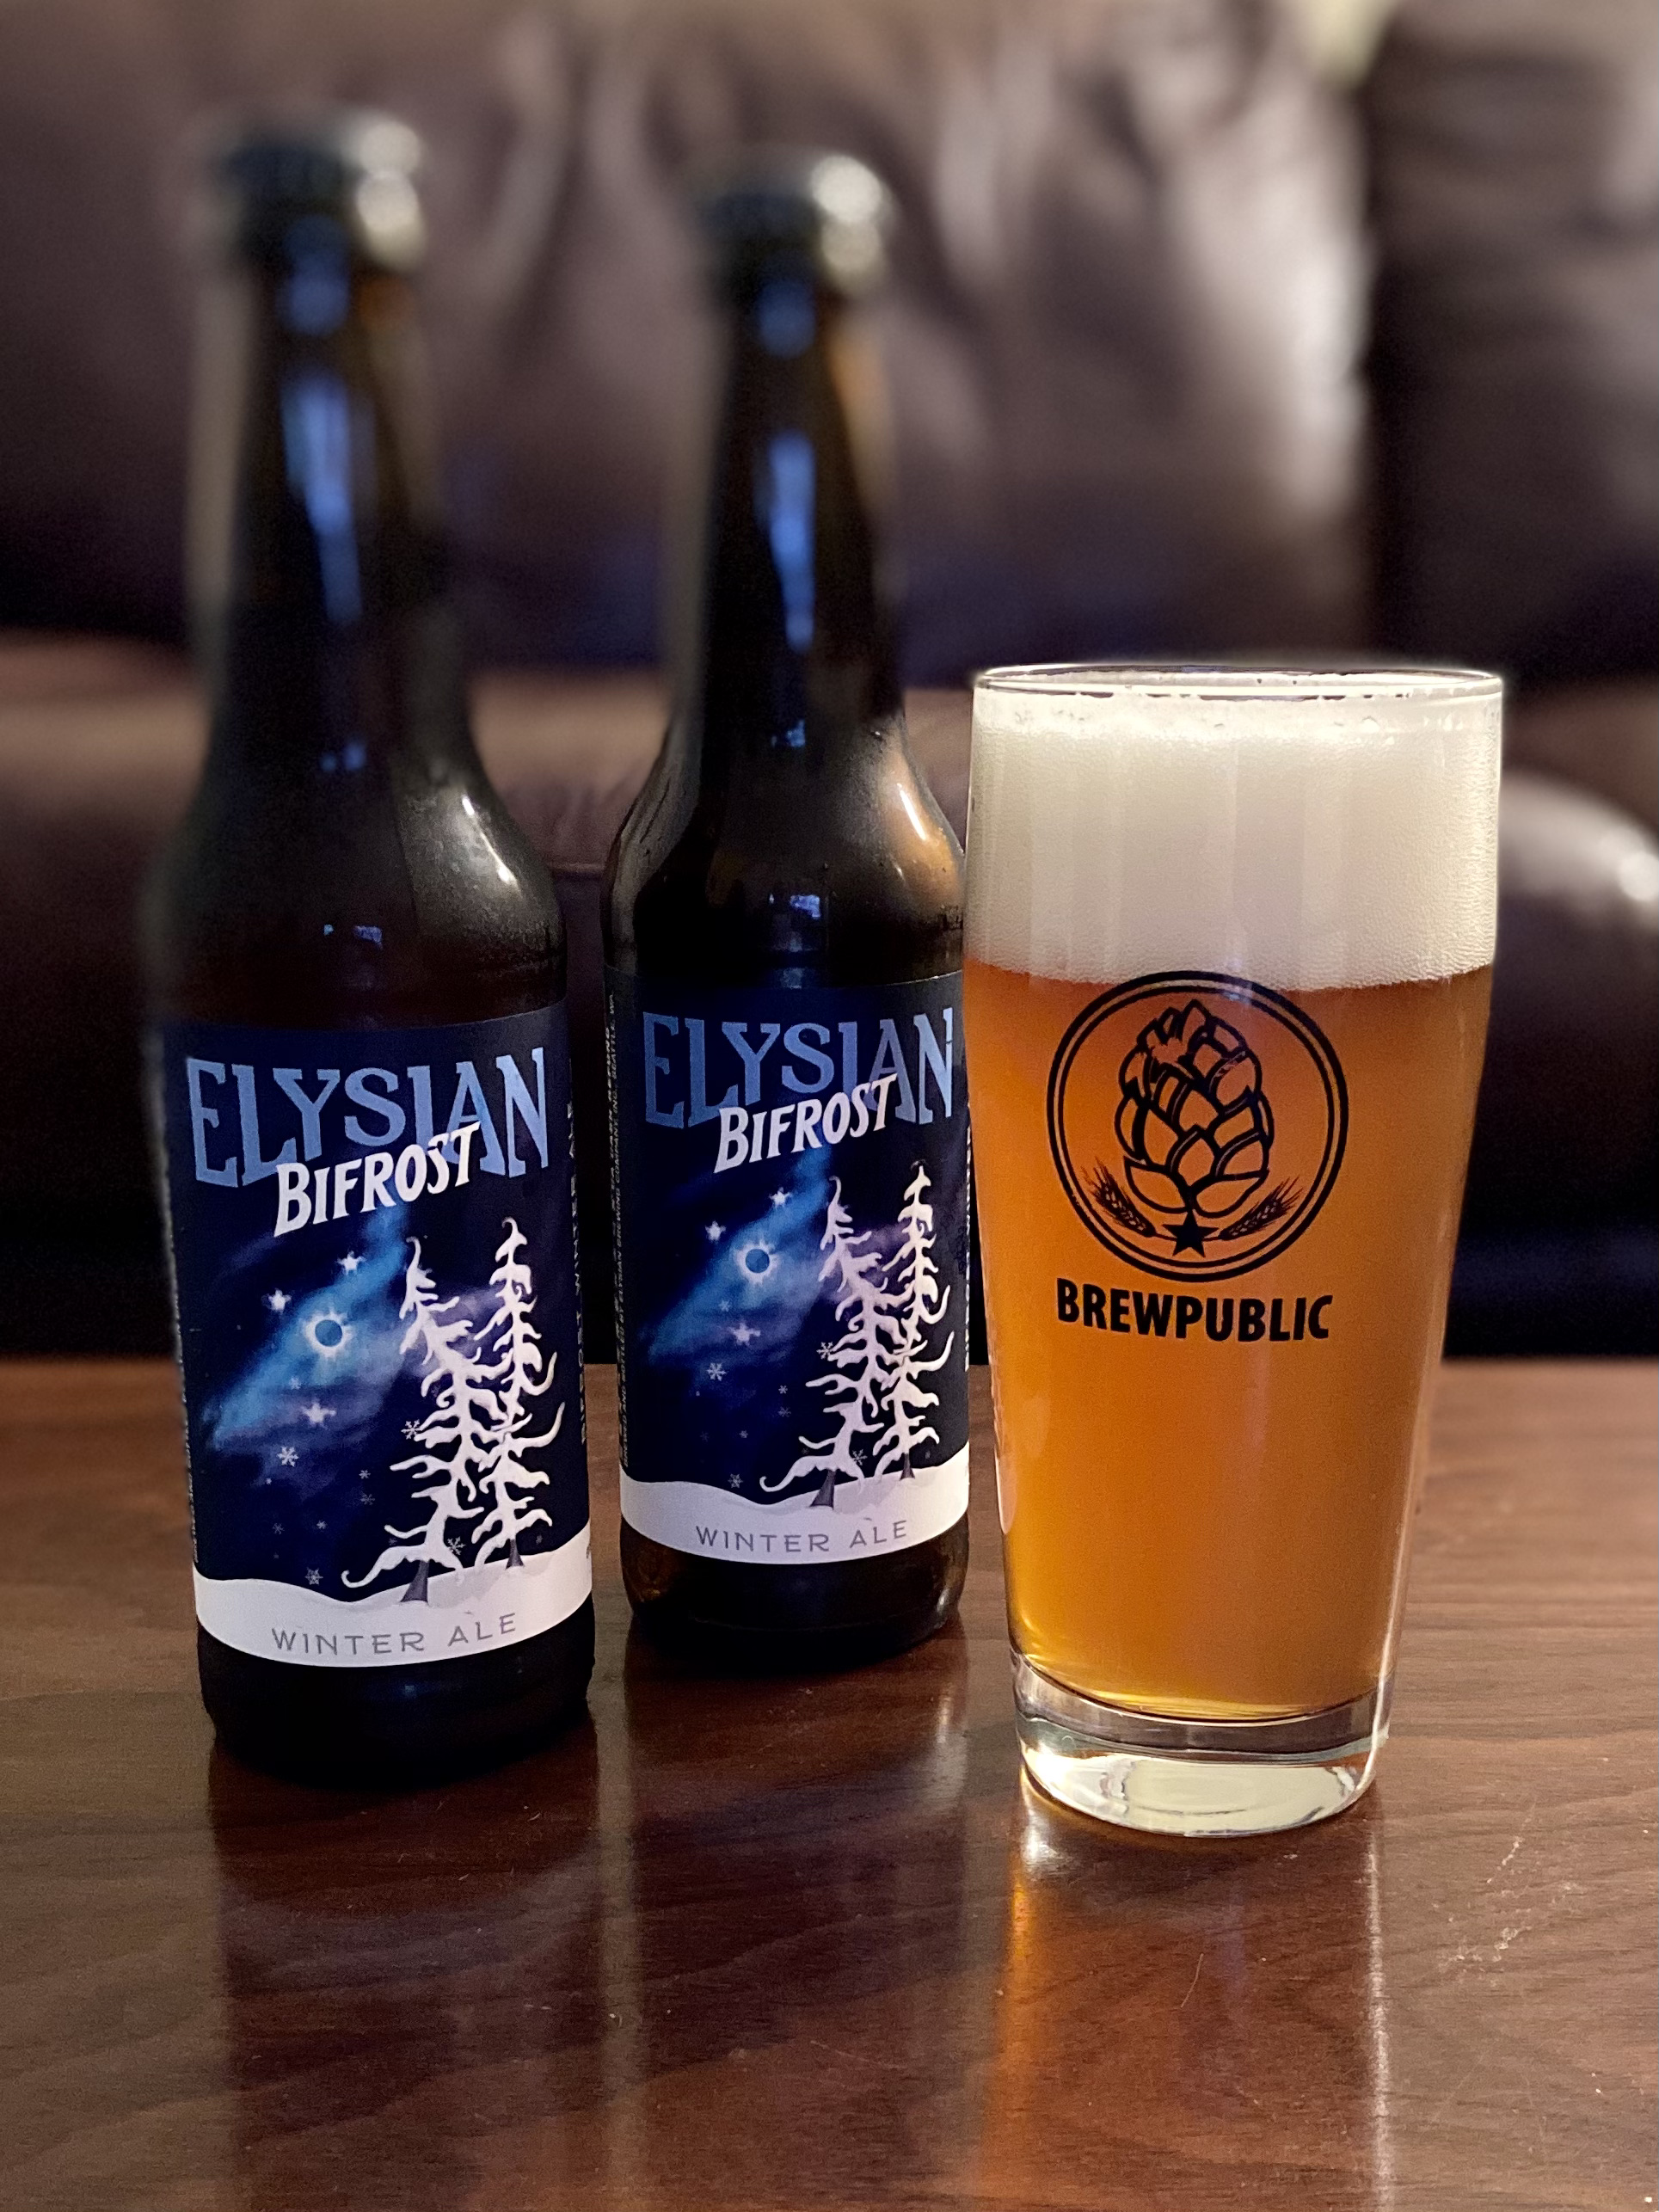 Elysian Brewing's Bifrost Winter Ale served in a BREWPUBLIC glass.